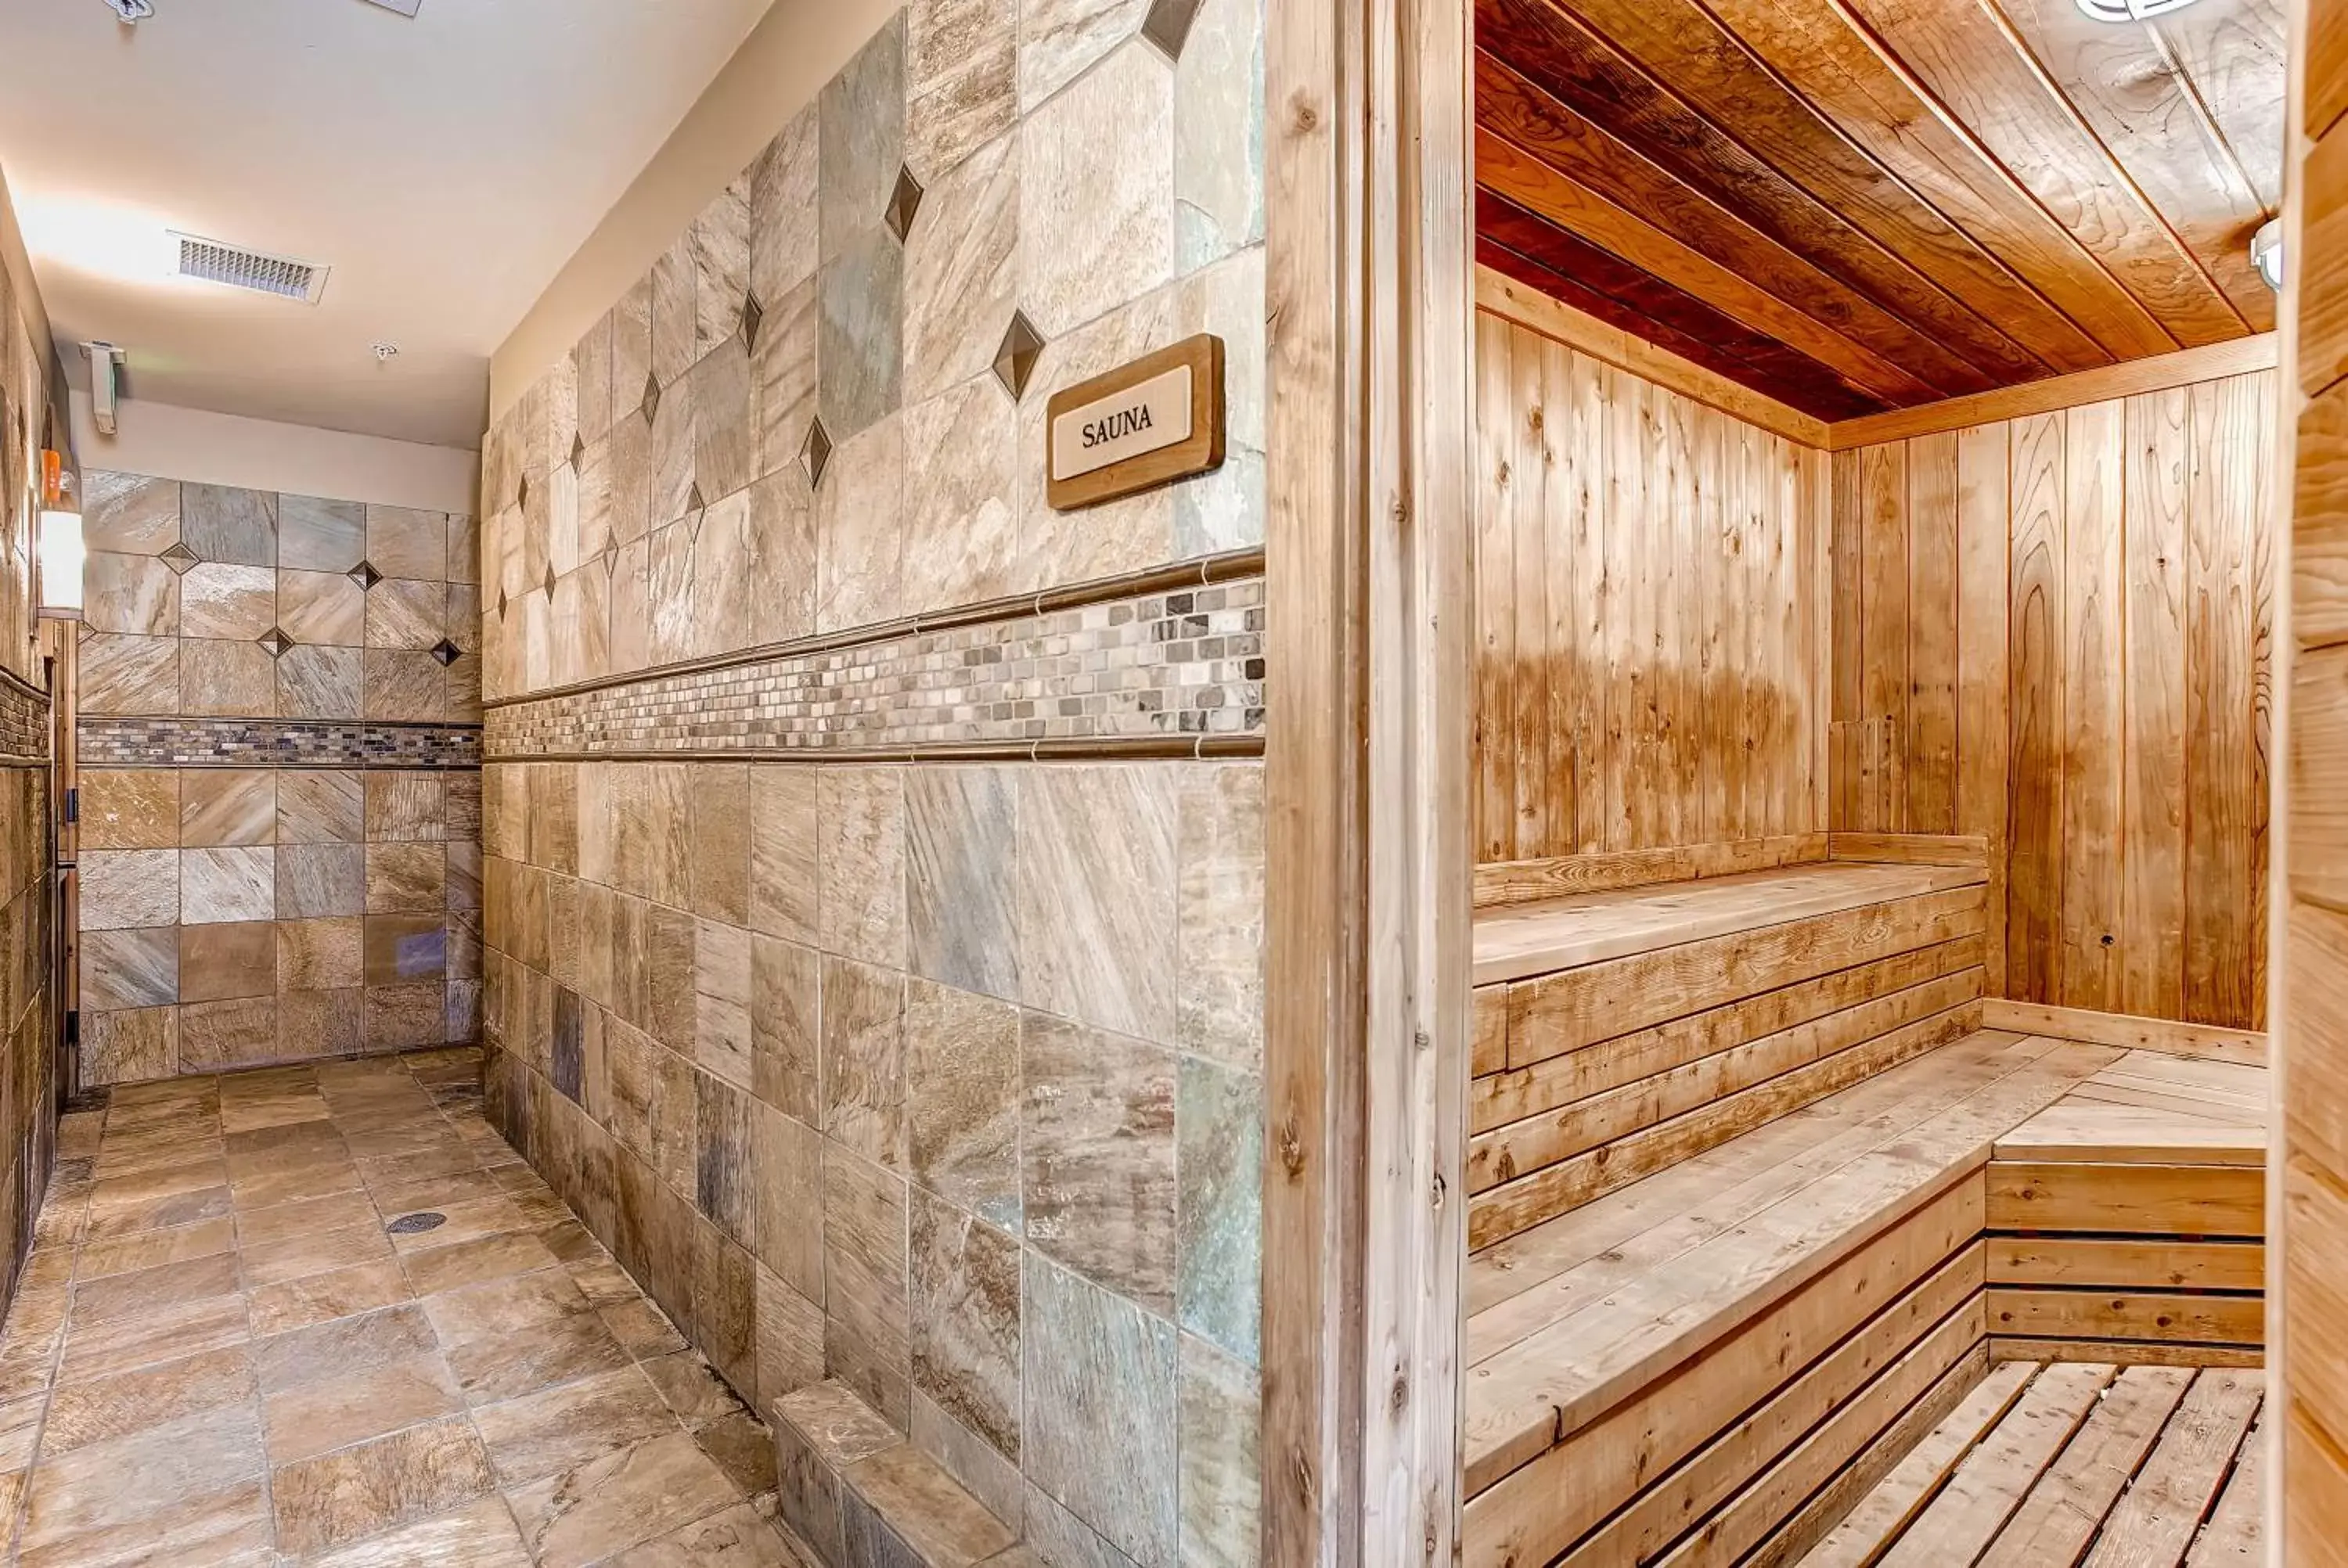 Sauna, Bunk Bed in The Keystone Lodge and Spa by Keystone Resort